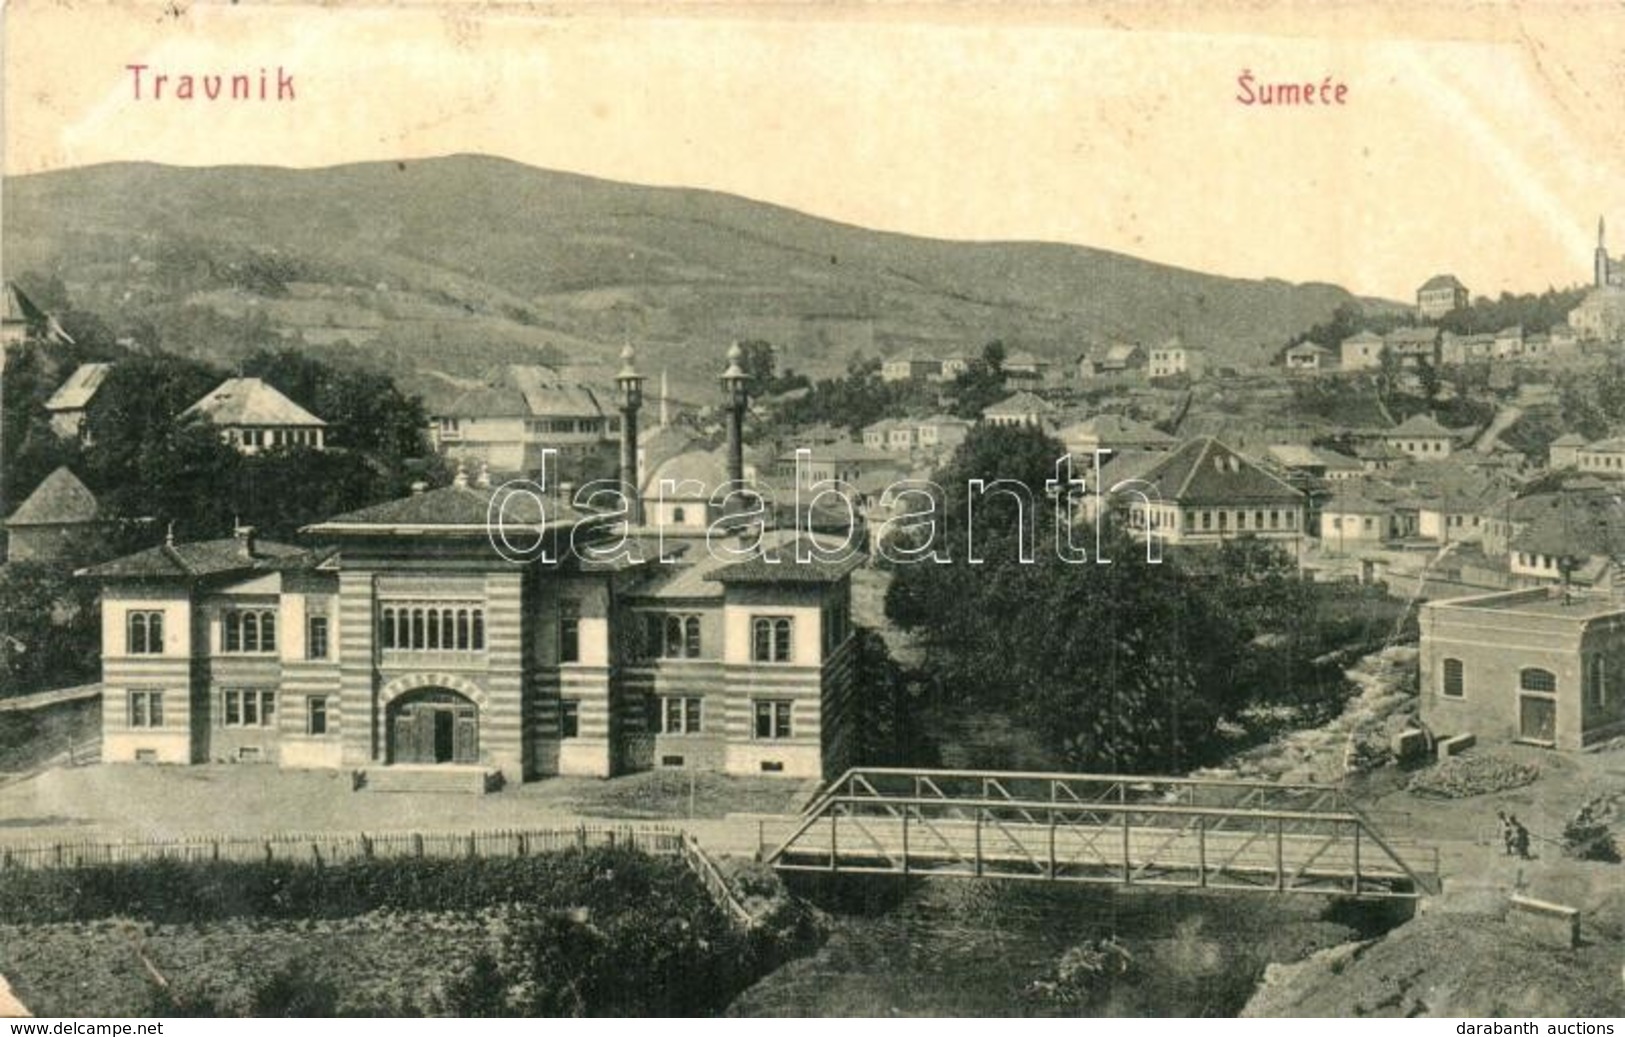 T3 Travnik, Sumece / Bridge. W. L. Bp. 4811. Ivana Grgica (EB) - Unclassified